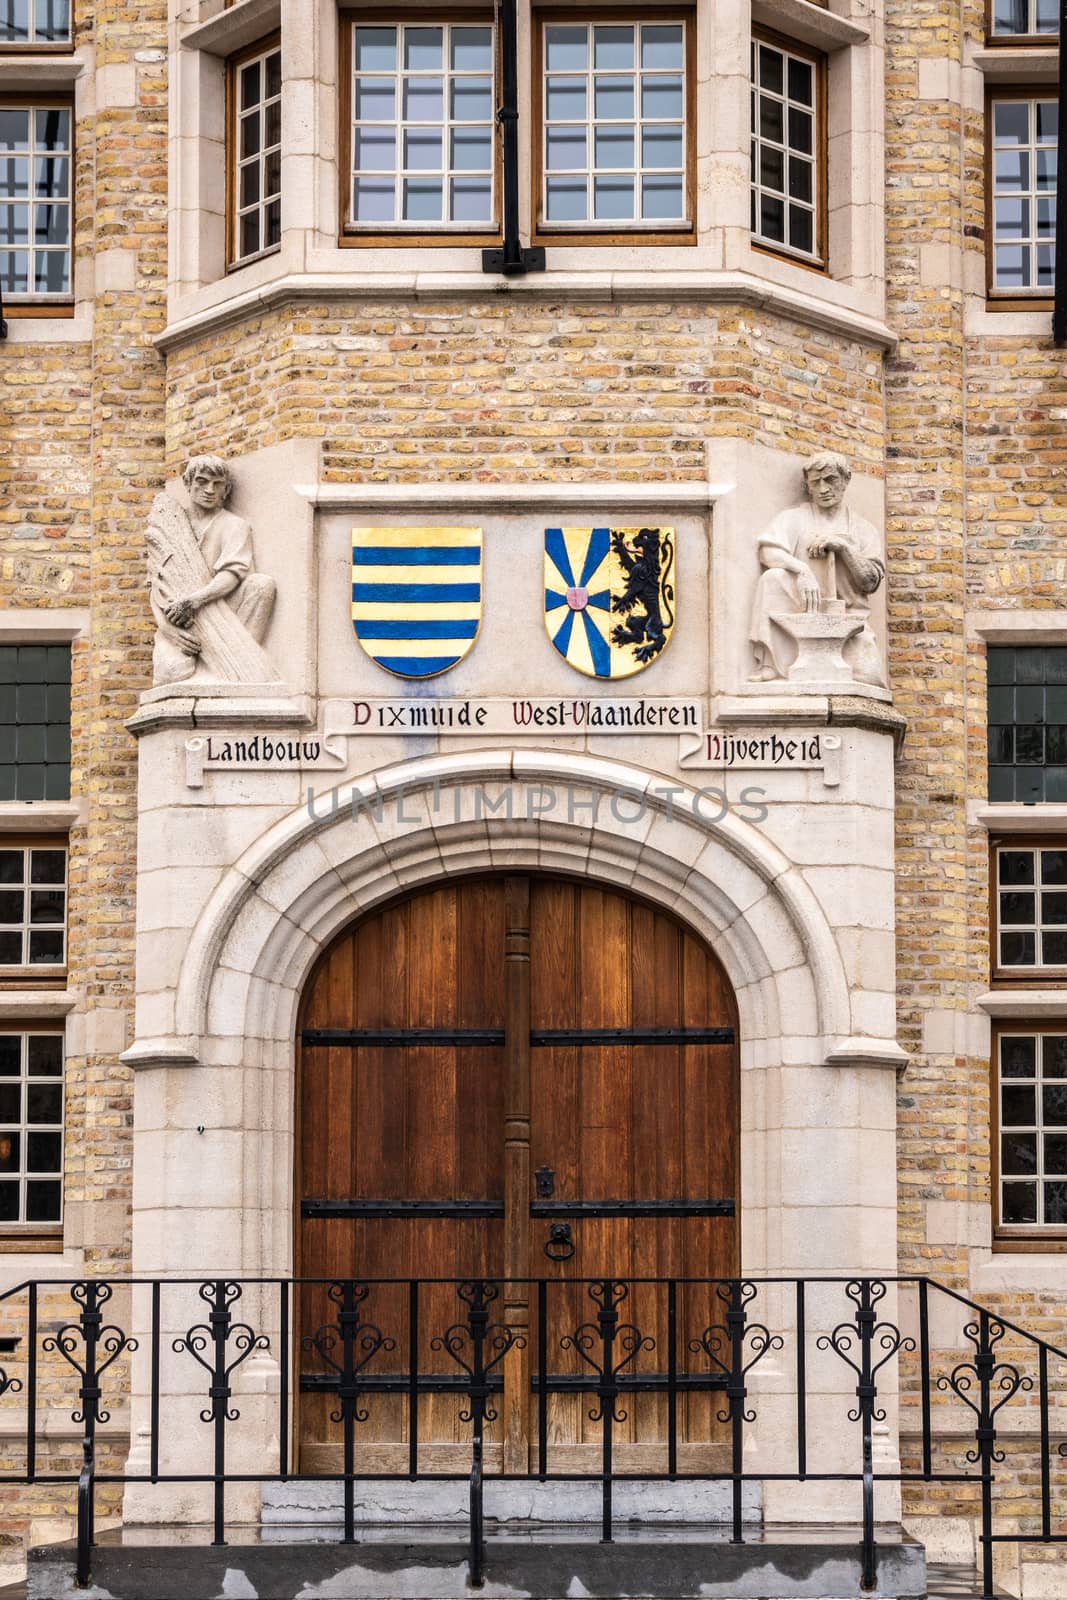 Entrance to Stadhuis or City Hall of Diksmuide, Flanders, Belgiu by Claudine